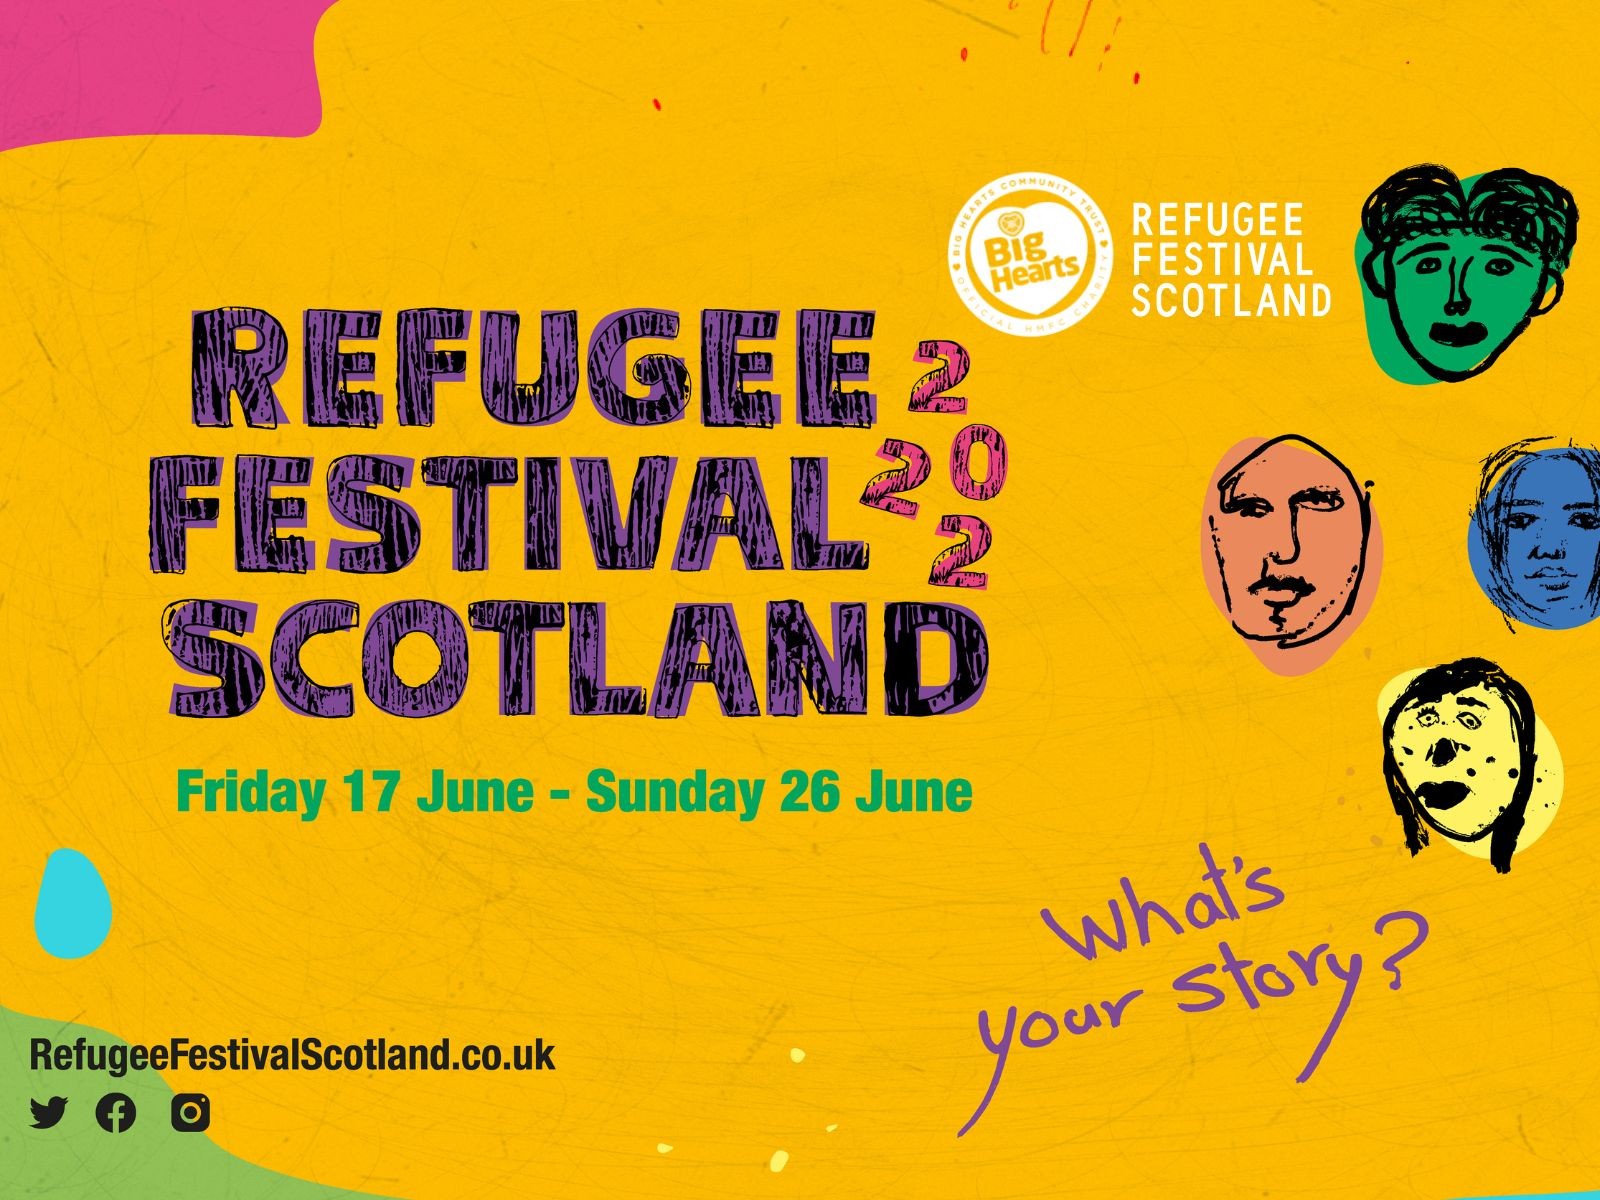  » Celebrating new Scots at the Refugee Festival Scotland!